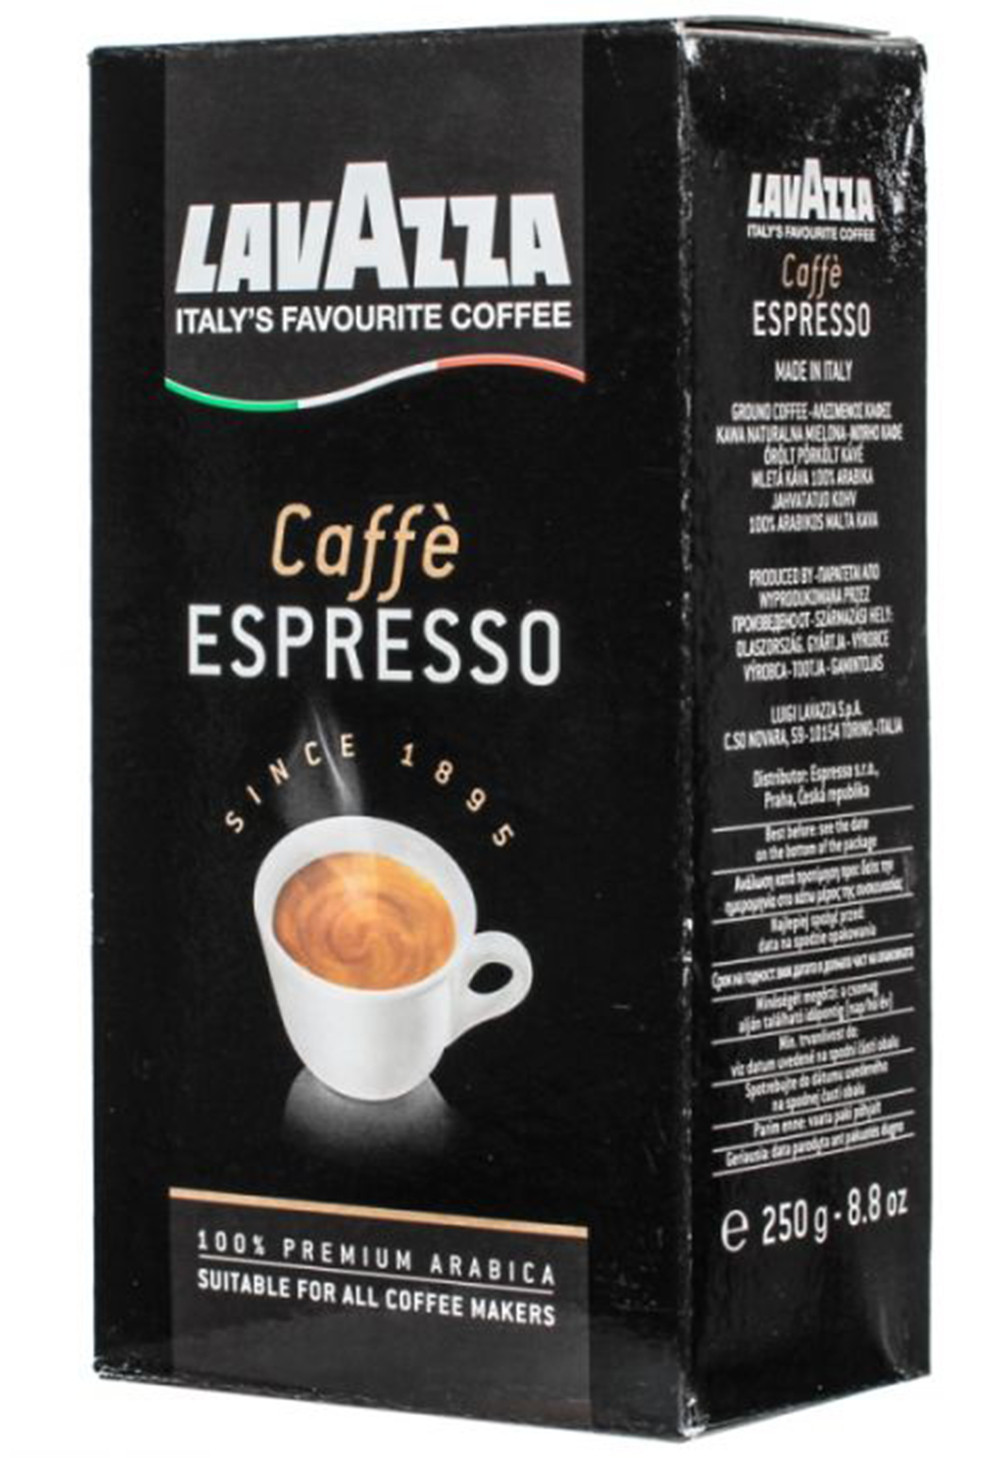 Кофе Лавацца Эспрессо молот 250г - интернет-магазин Близнецы